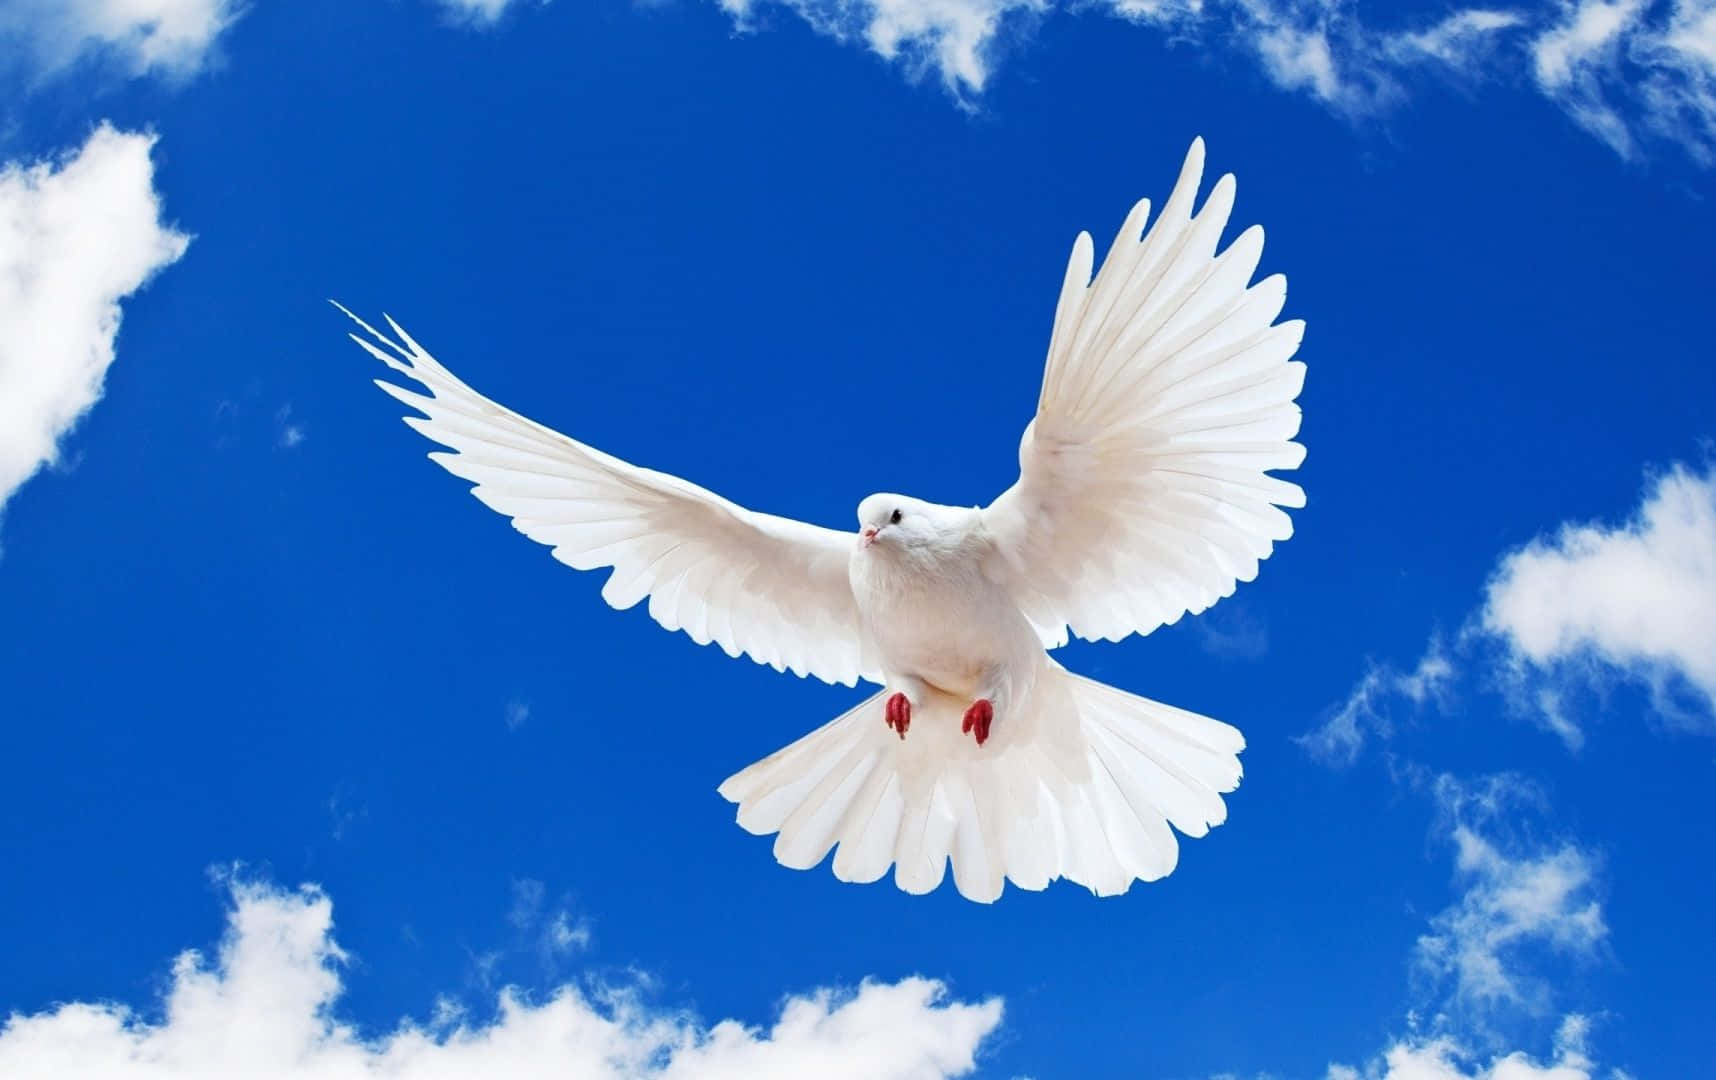 A Graceful Dove Soaring Through the Sky